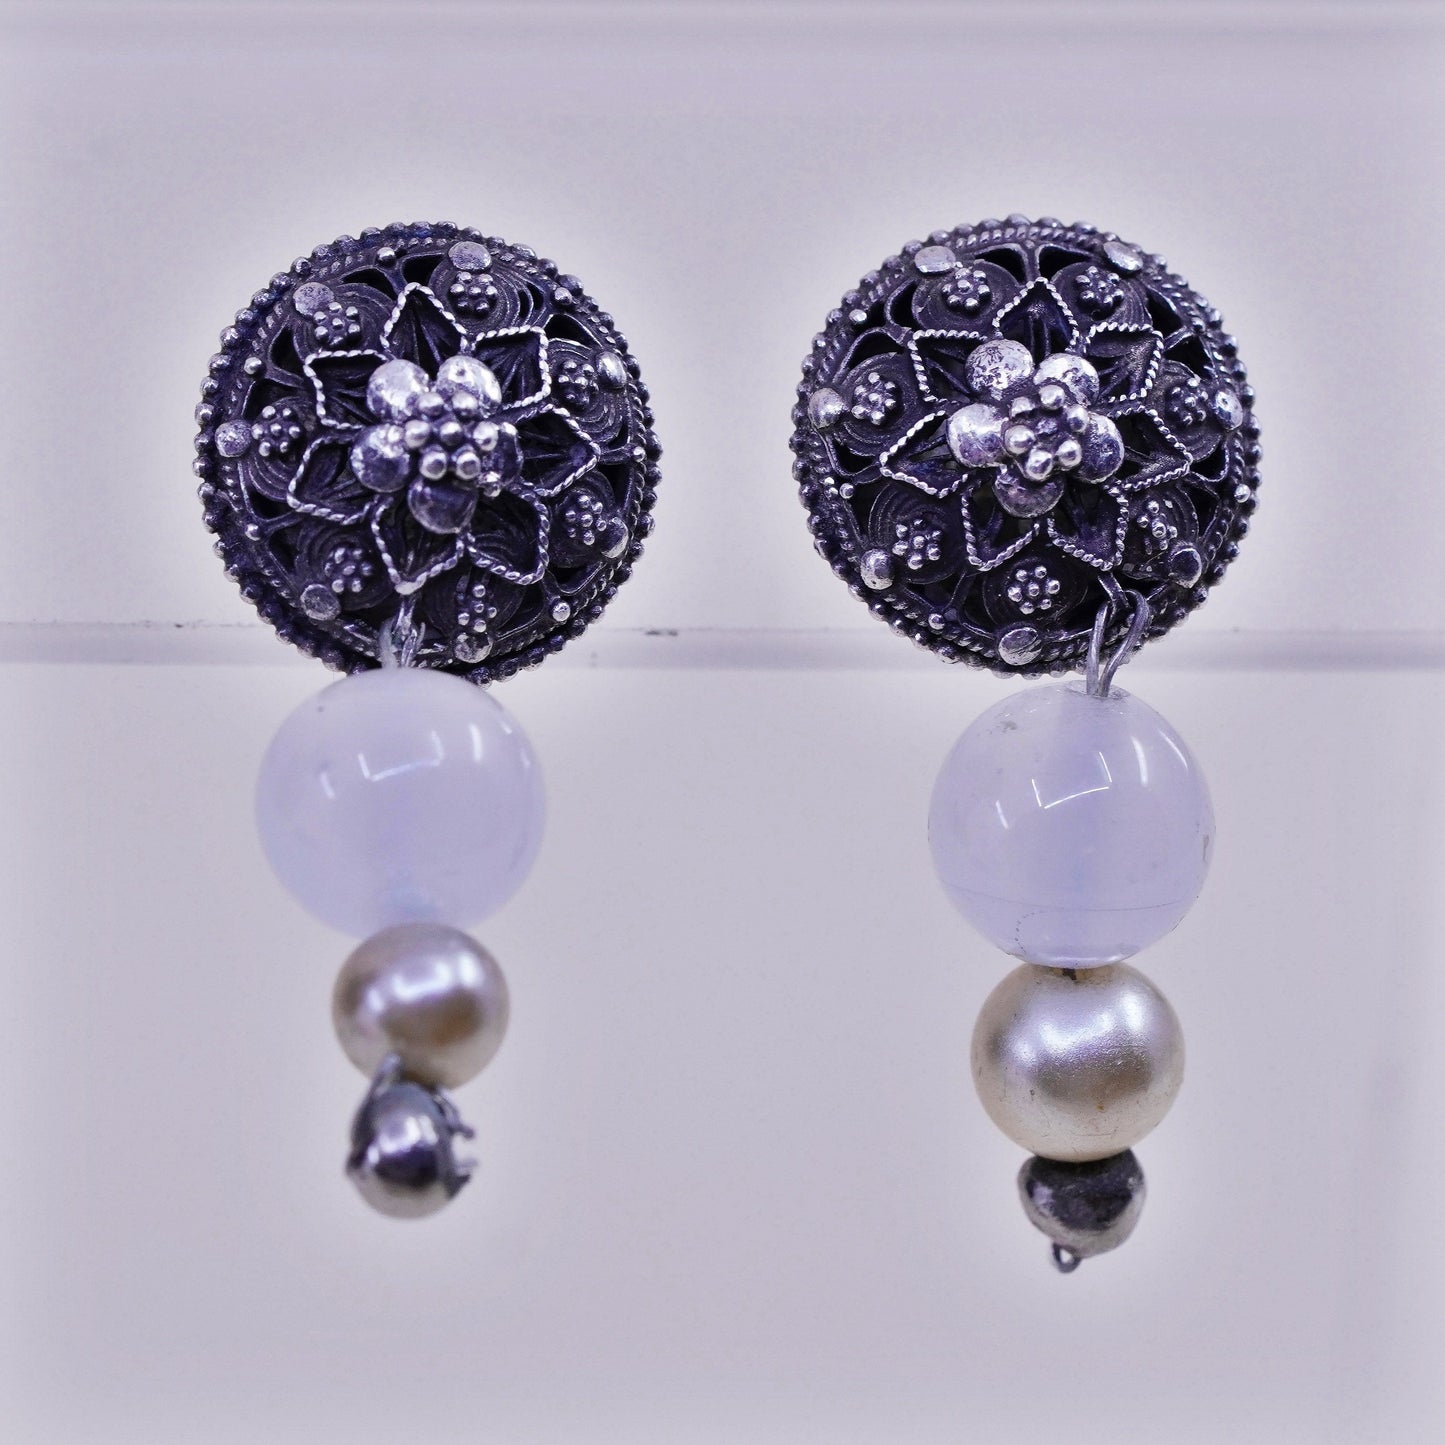 Vintage Sterling silver handmade earrings, 925 filigree studs with quartz